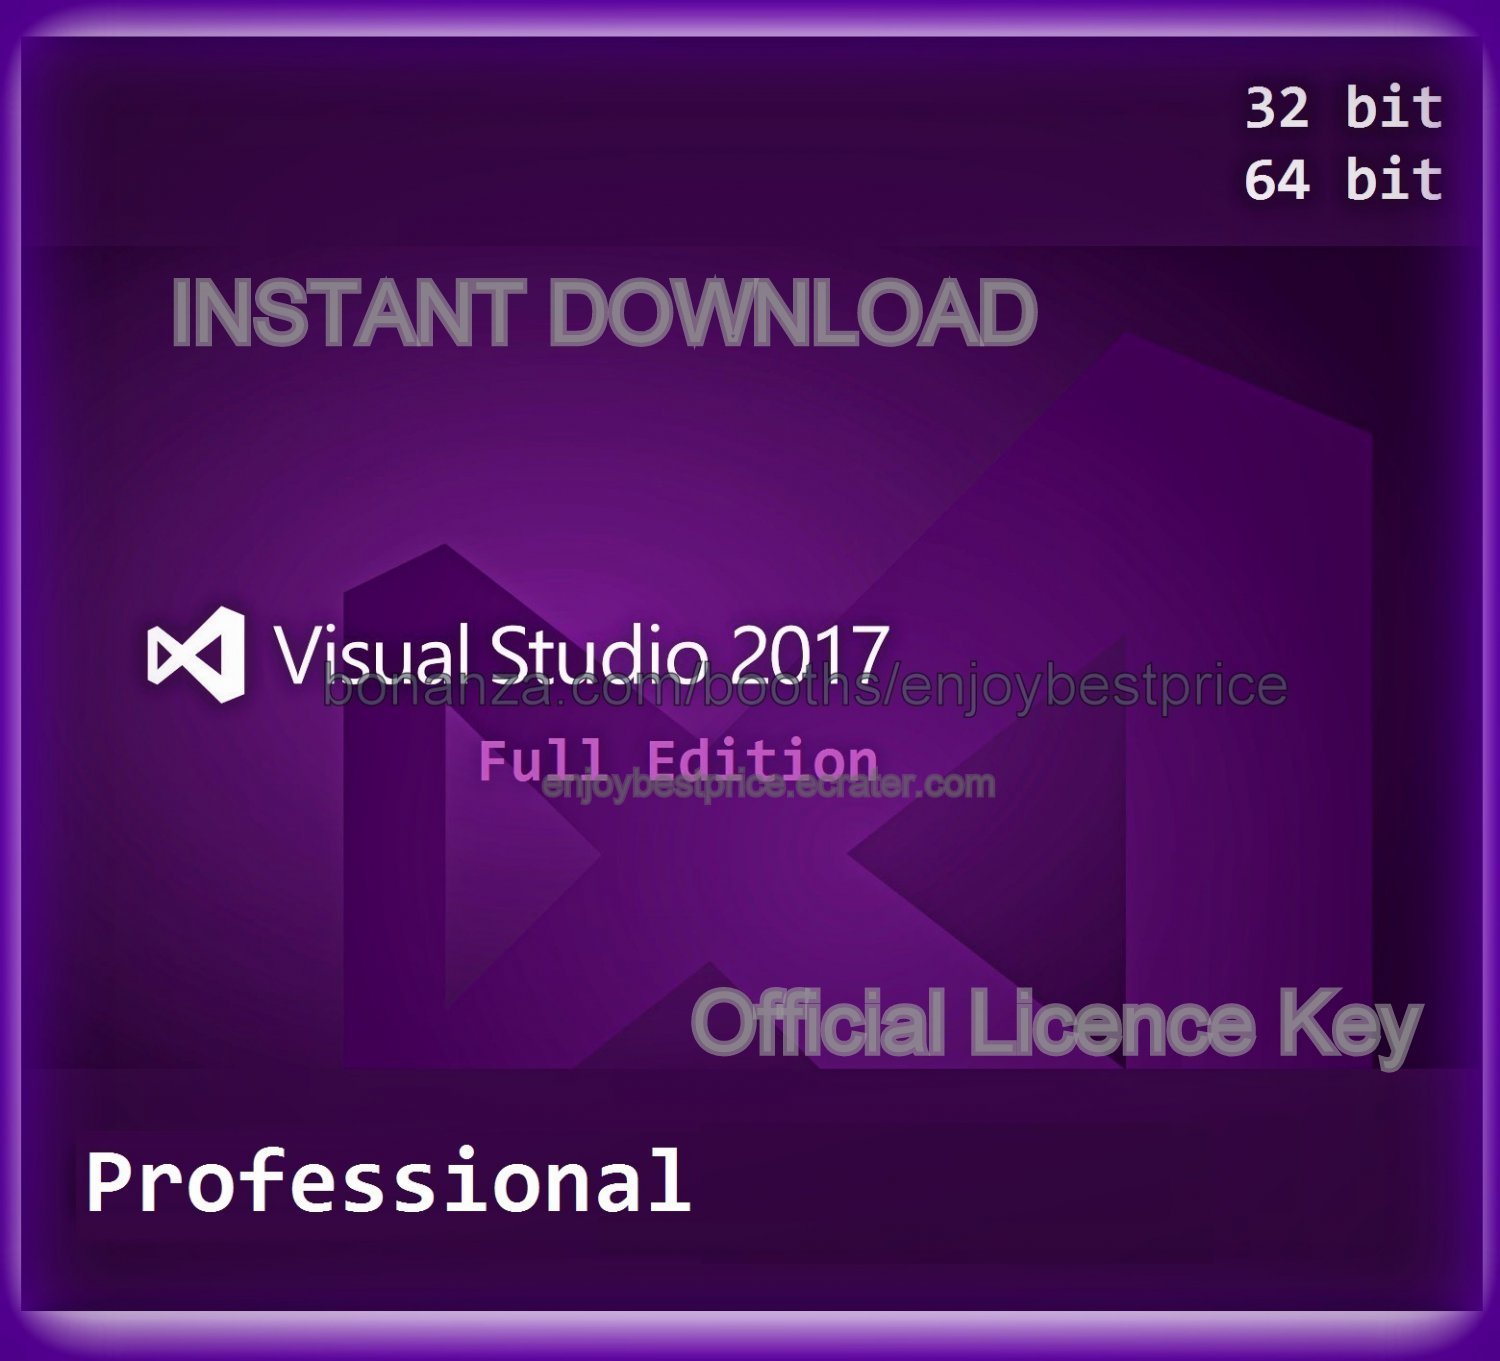 unlimited lavish software key